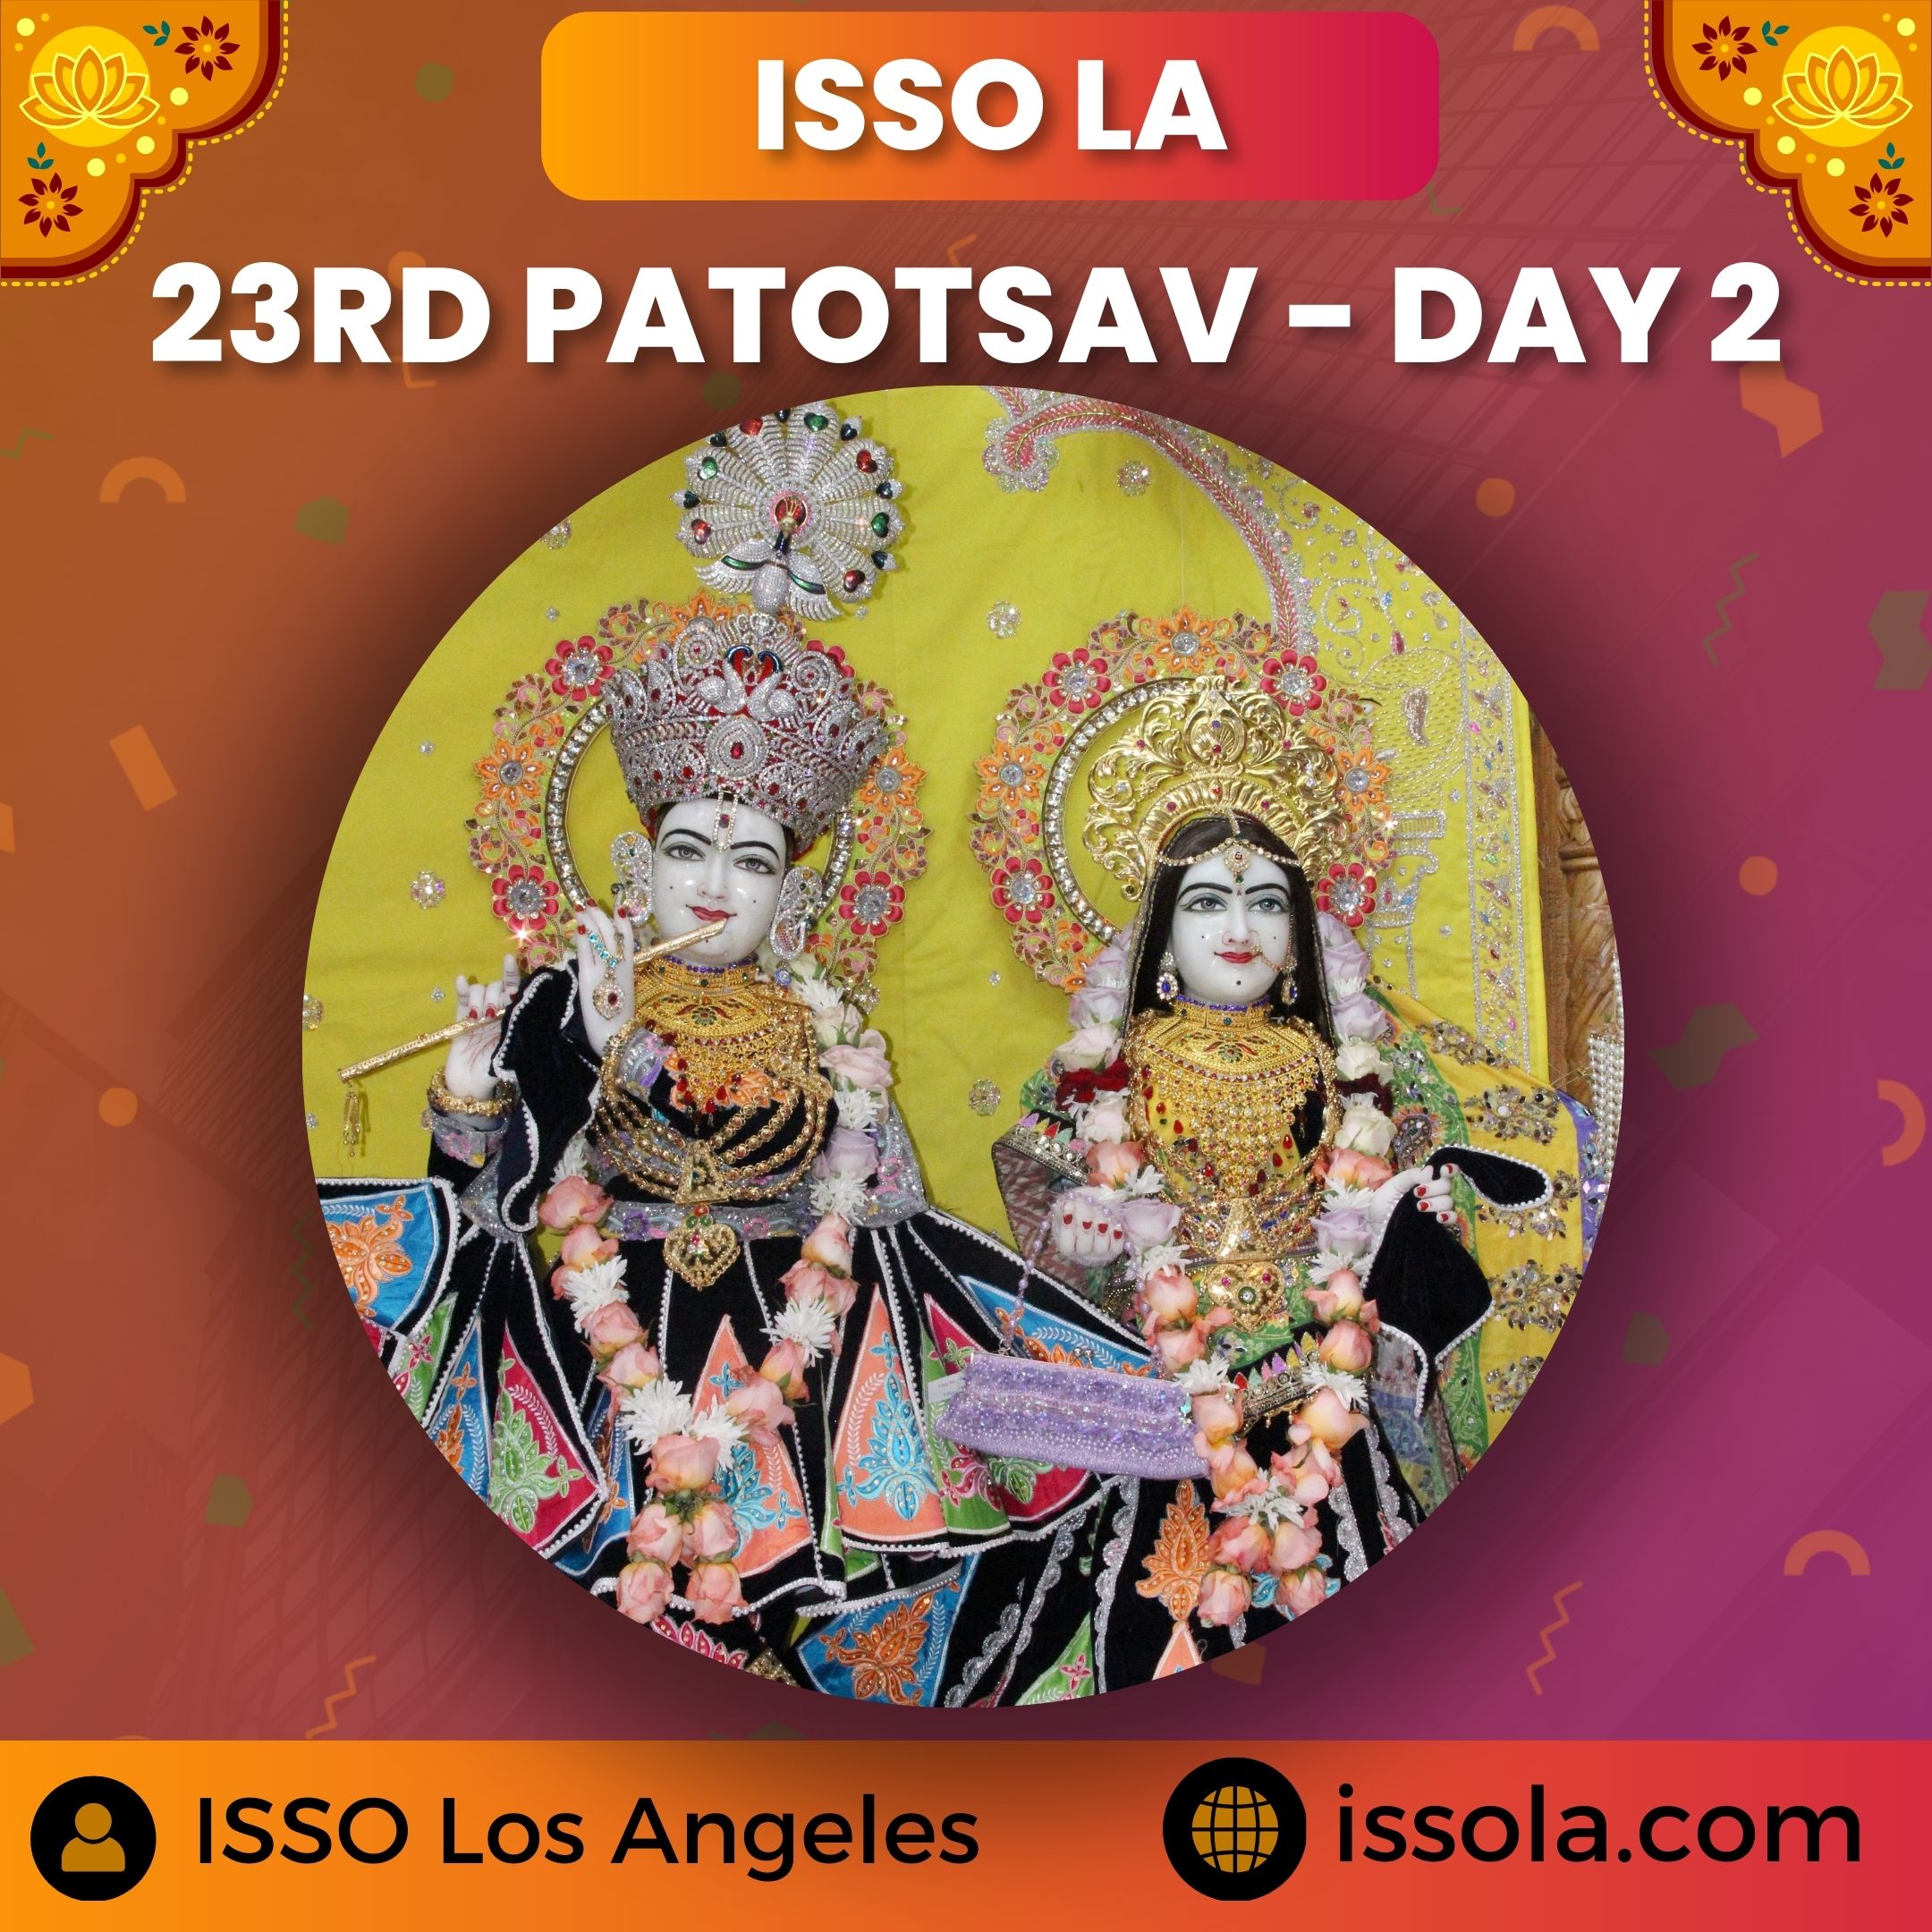 23rd Patotsav Day 2 - ISSO Swaminarayan Temple, Norwalk, Los Angeles, www.issola.com